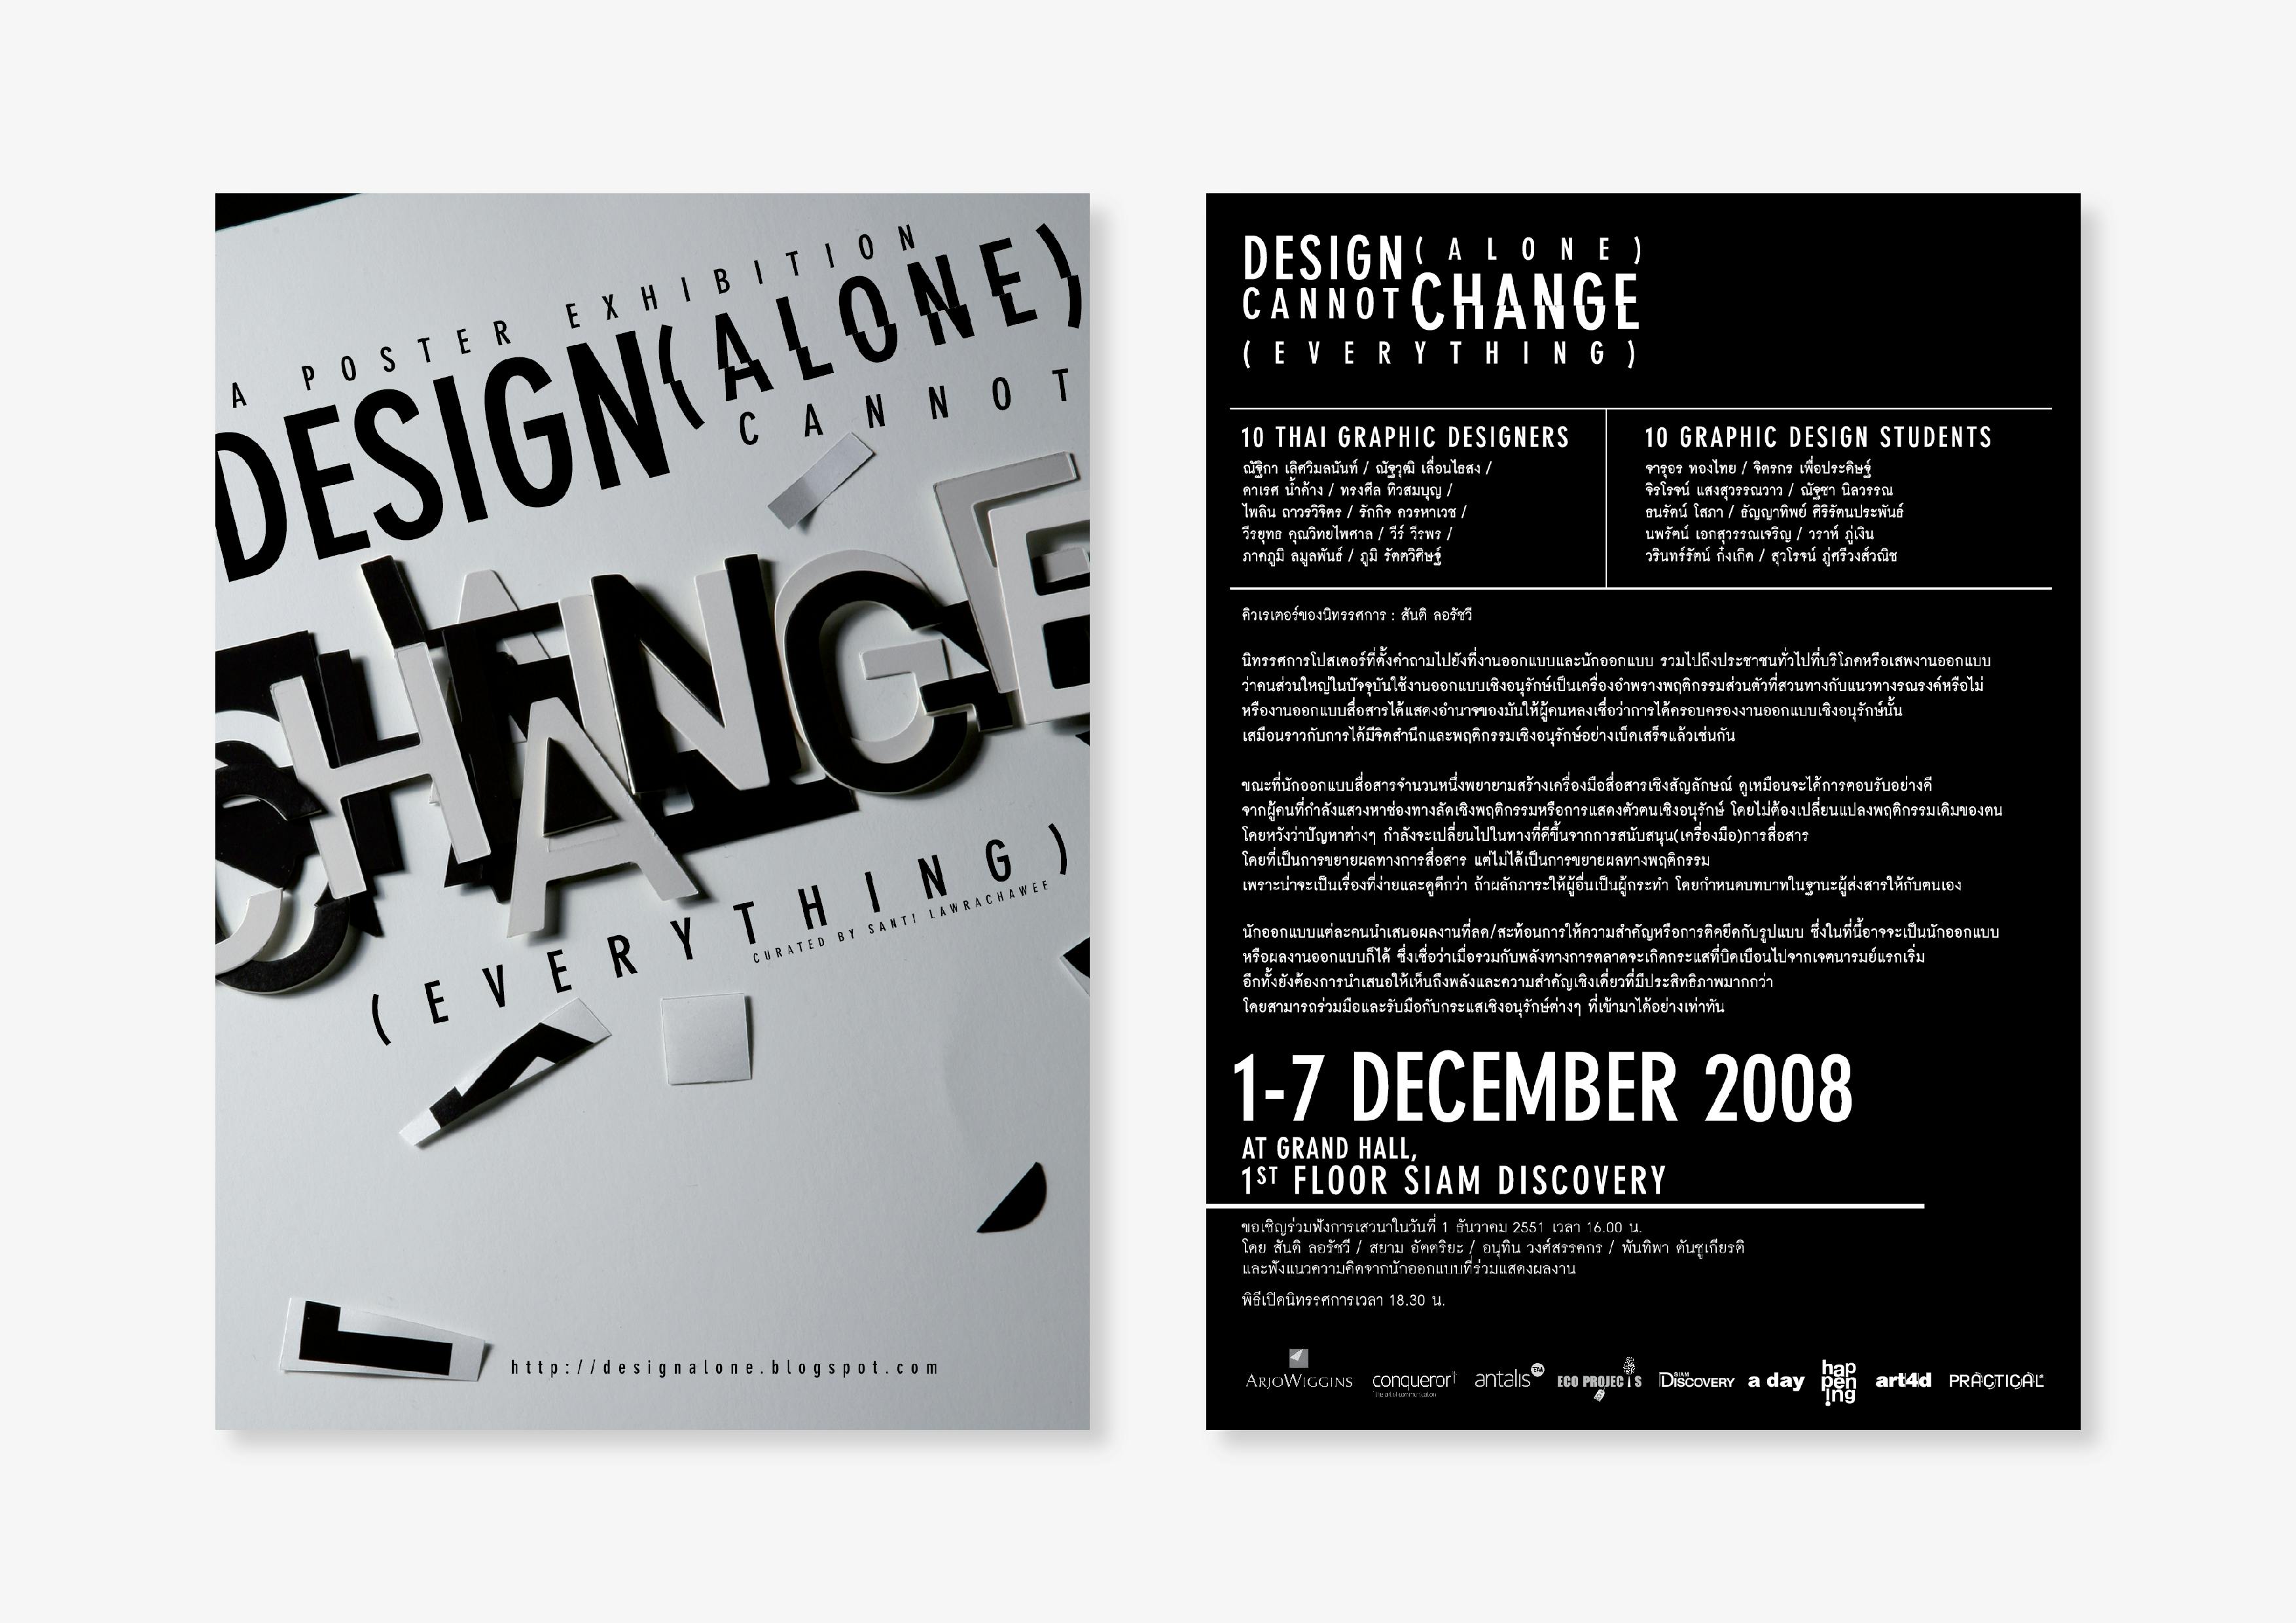 w--design-alone-cannot-change--02